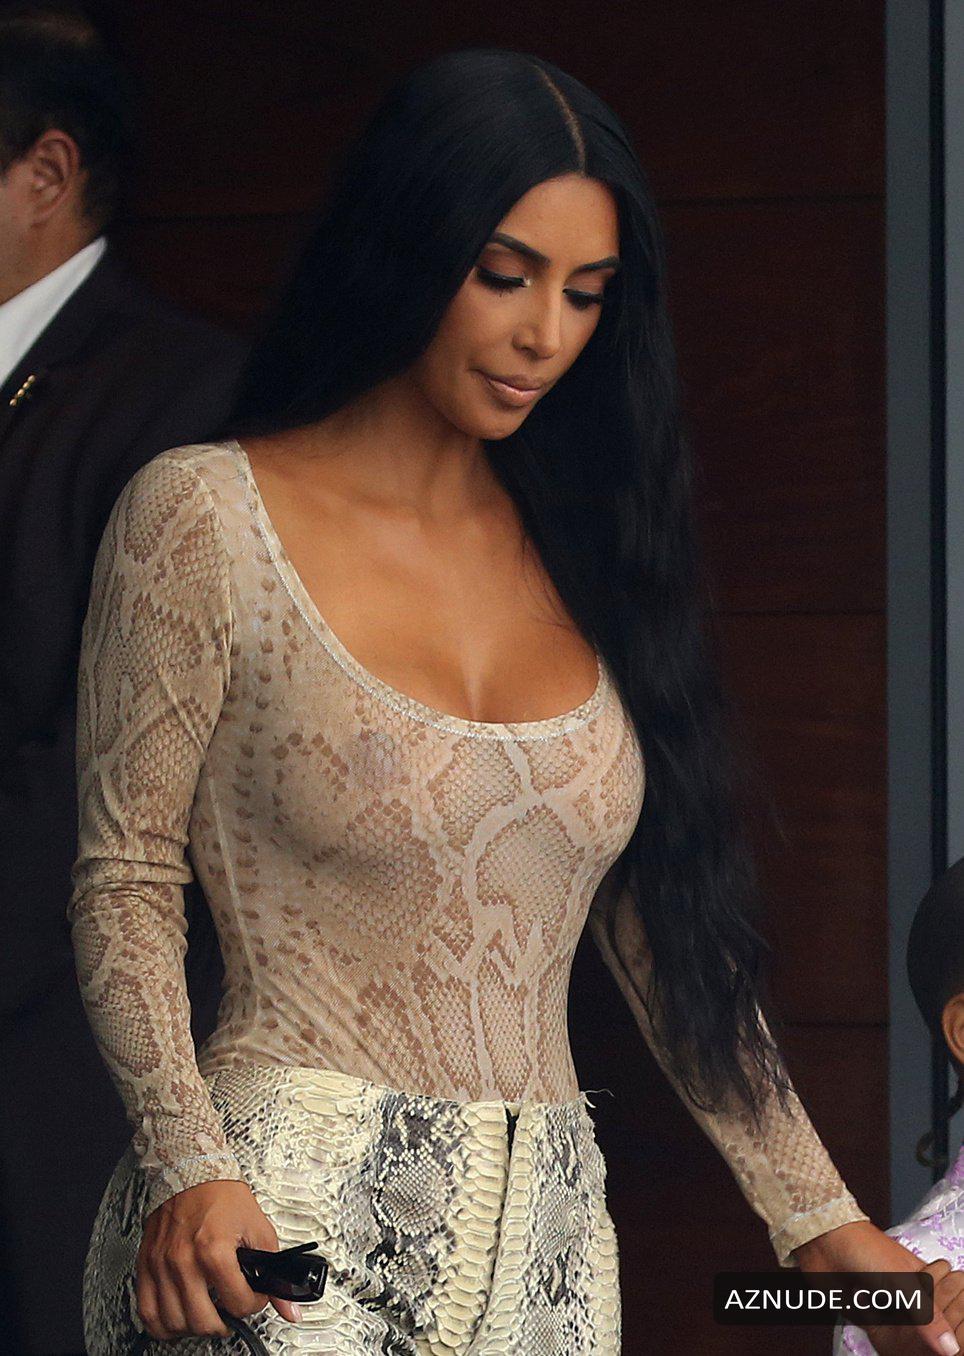 Kim Kardashian Sexy Heading Out From Miami Hotel With Friend Jonathan